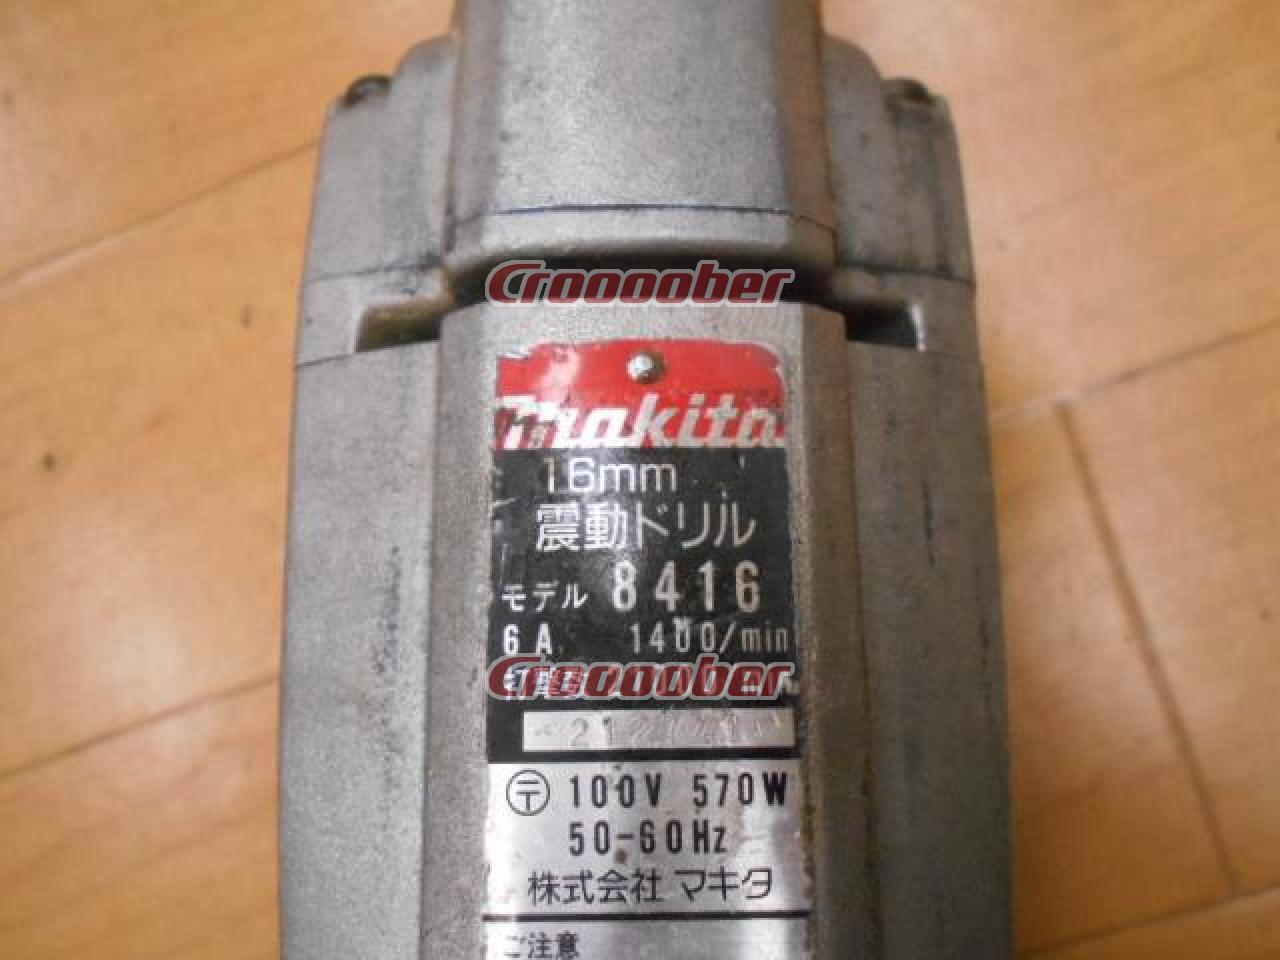 Makita Corporation 8416 16mm Vibration Drill | 振動ドリル 